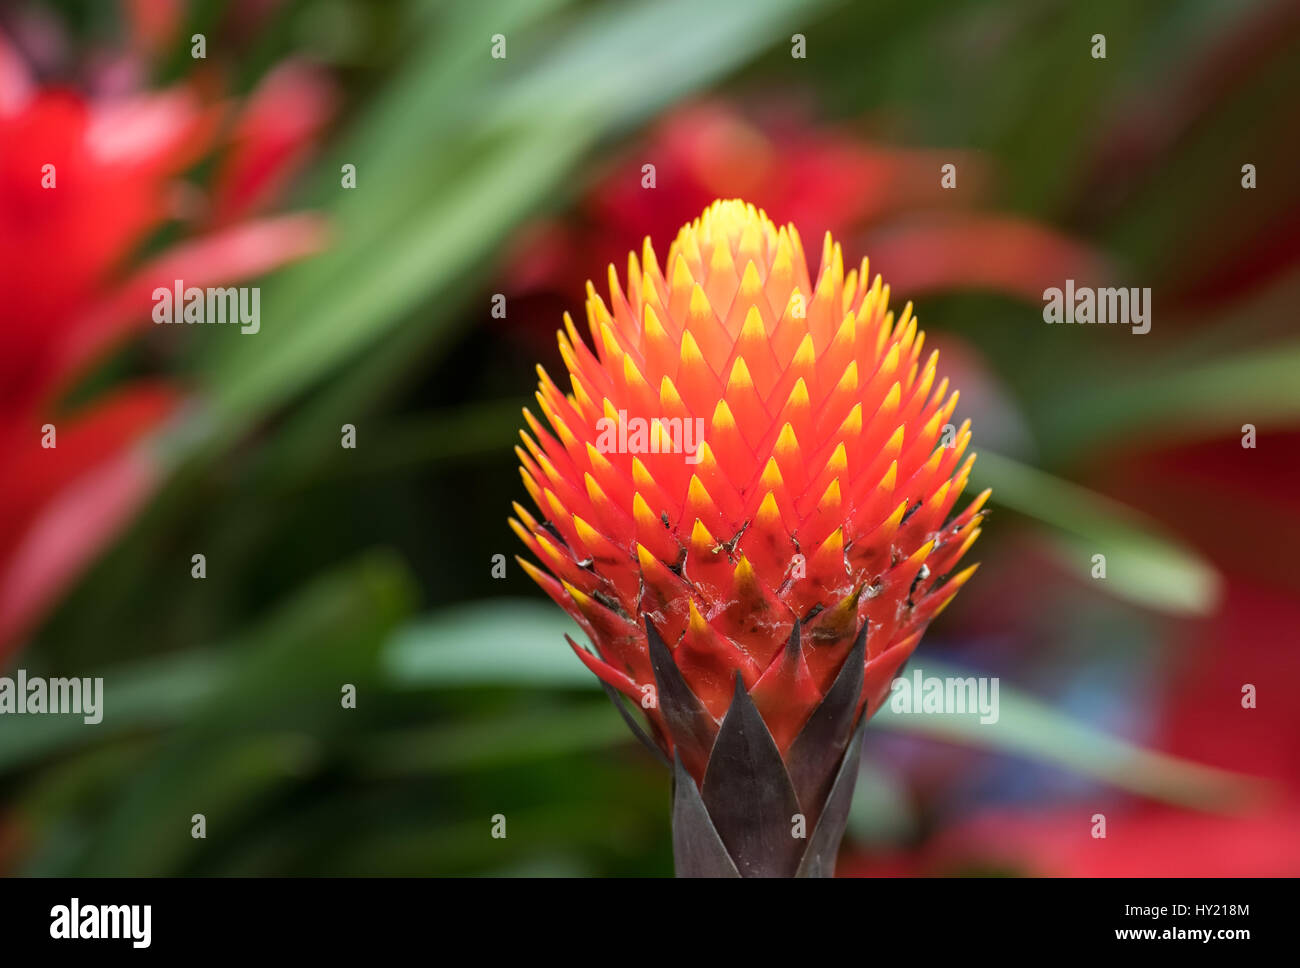 red color of Guzmania flower in garden Stock Photo